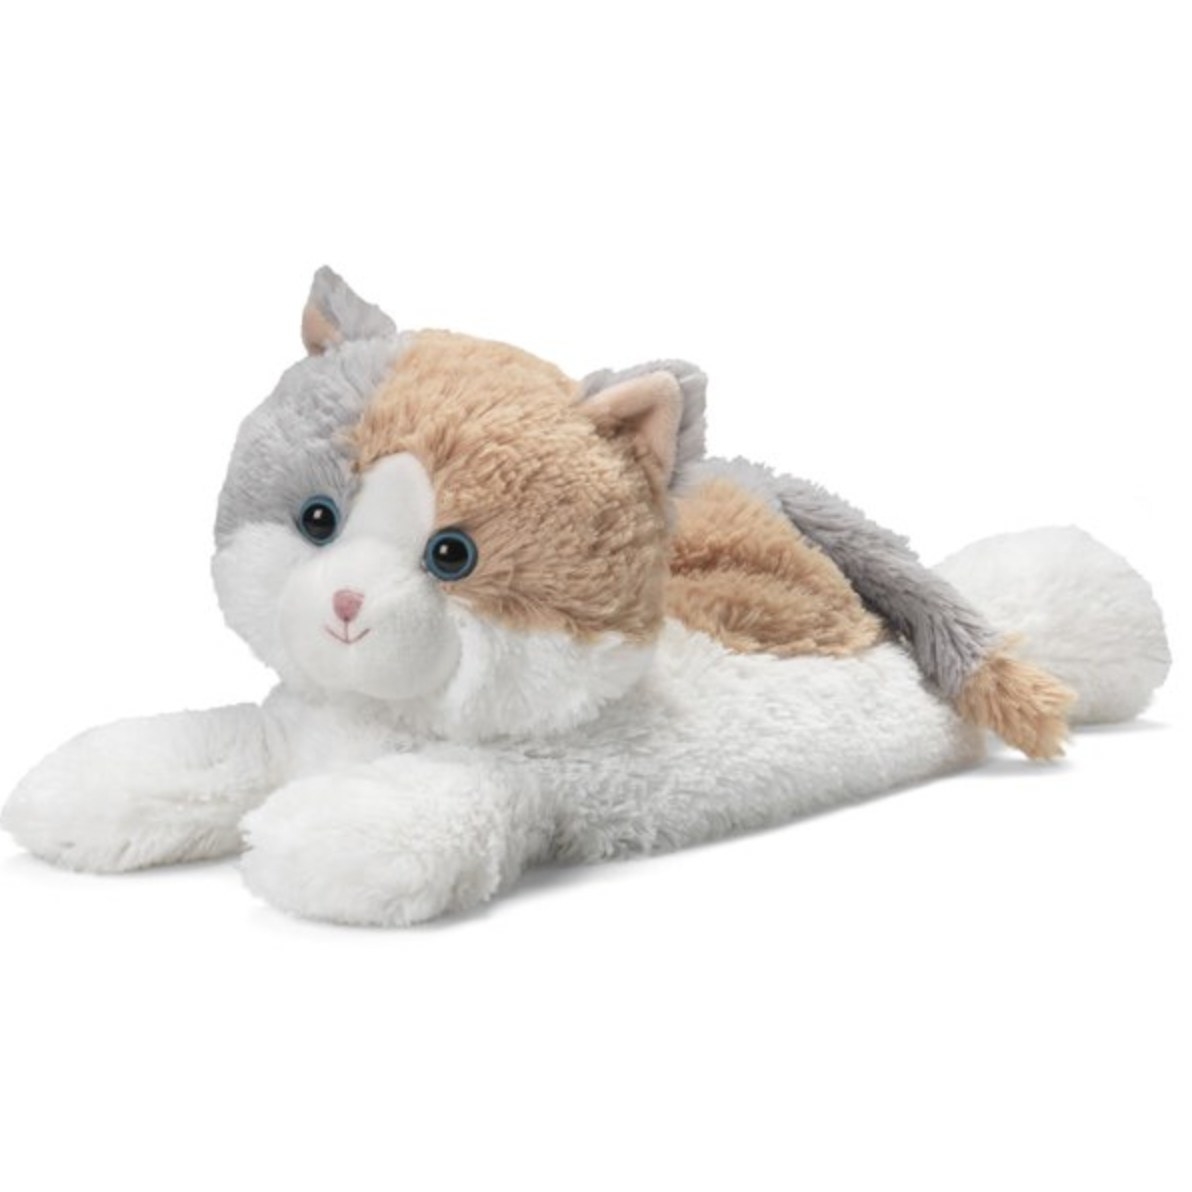 The calico cat plush toy